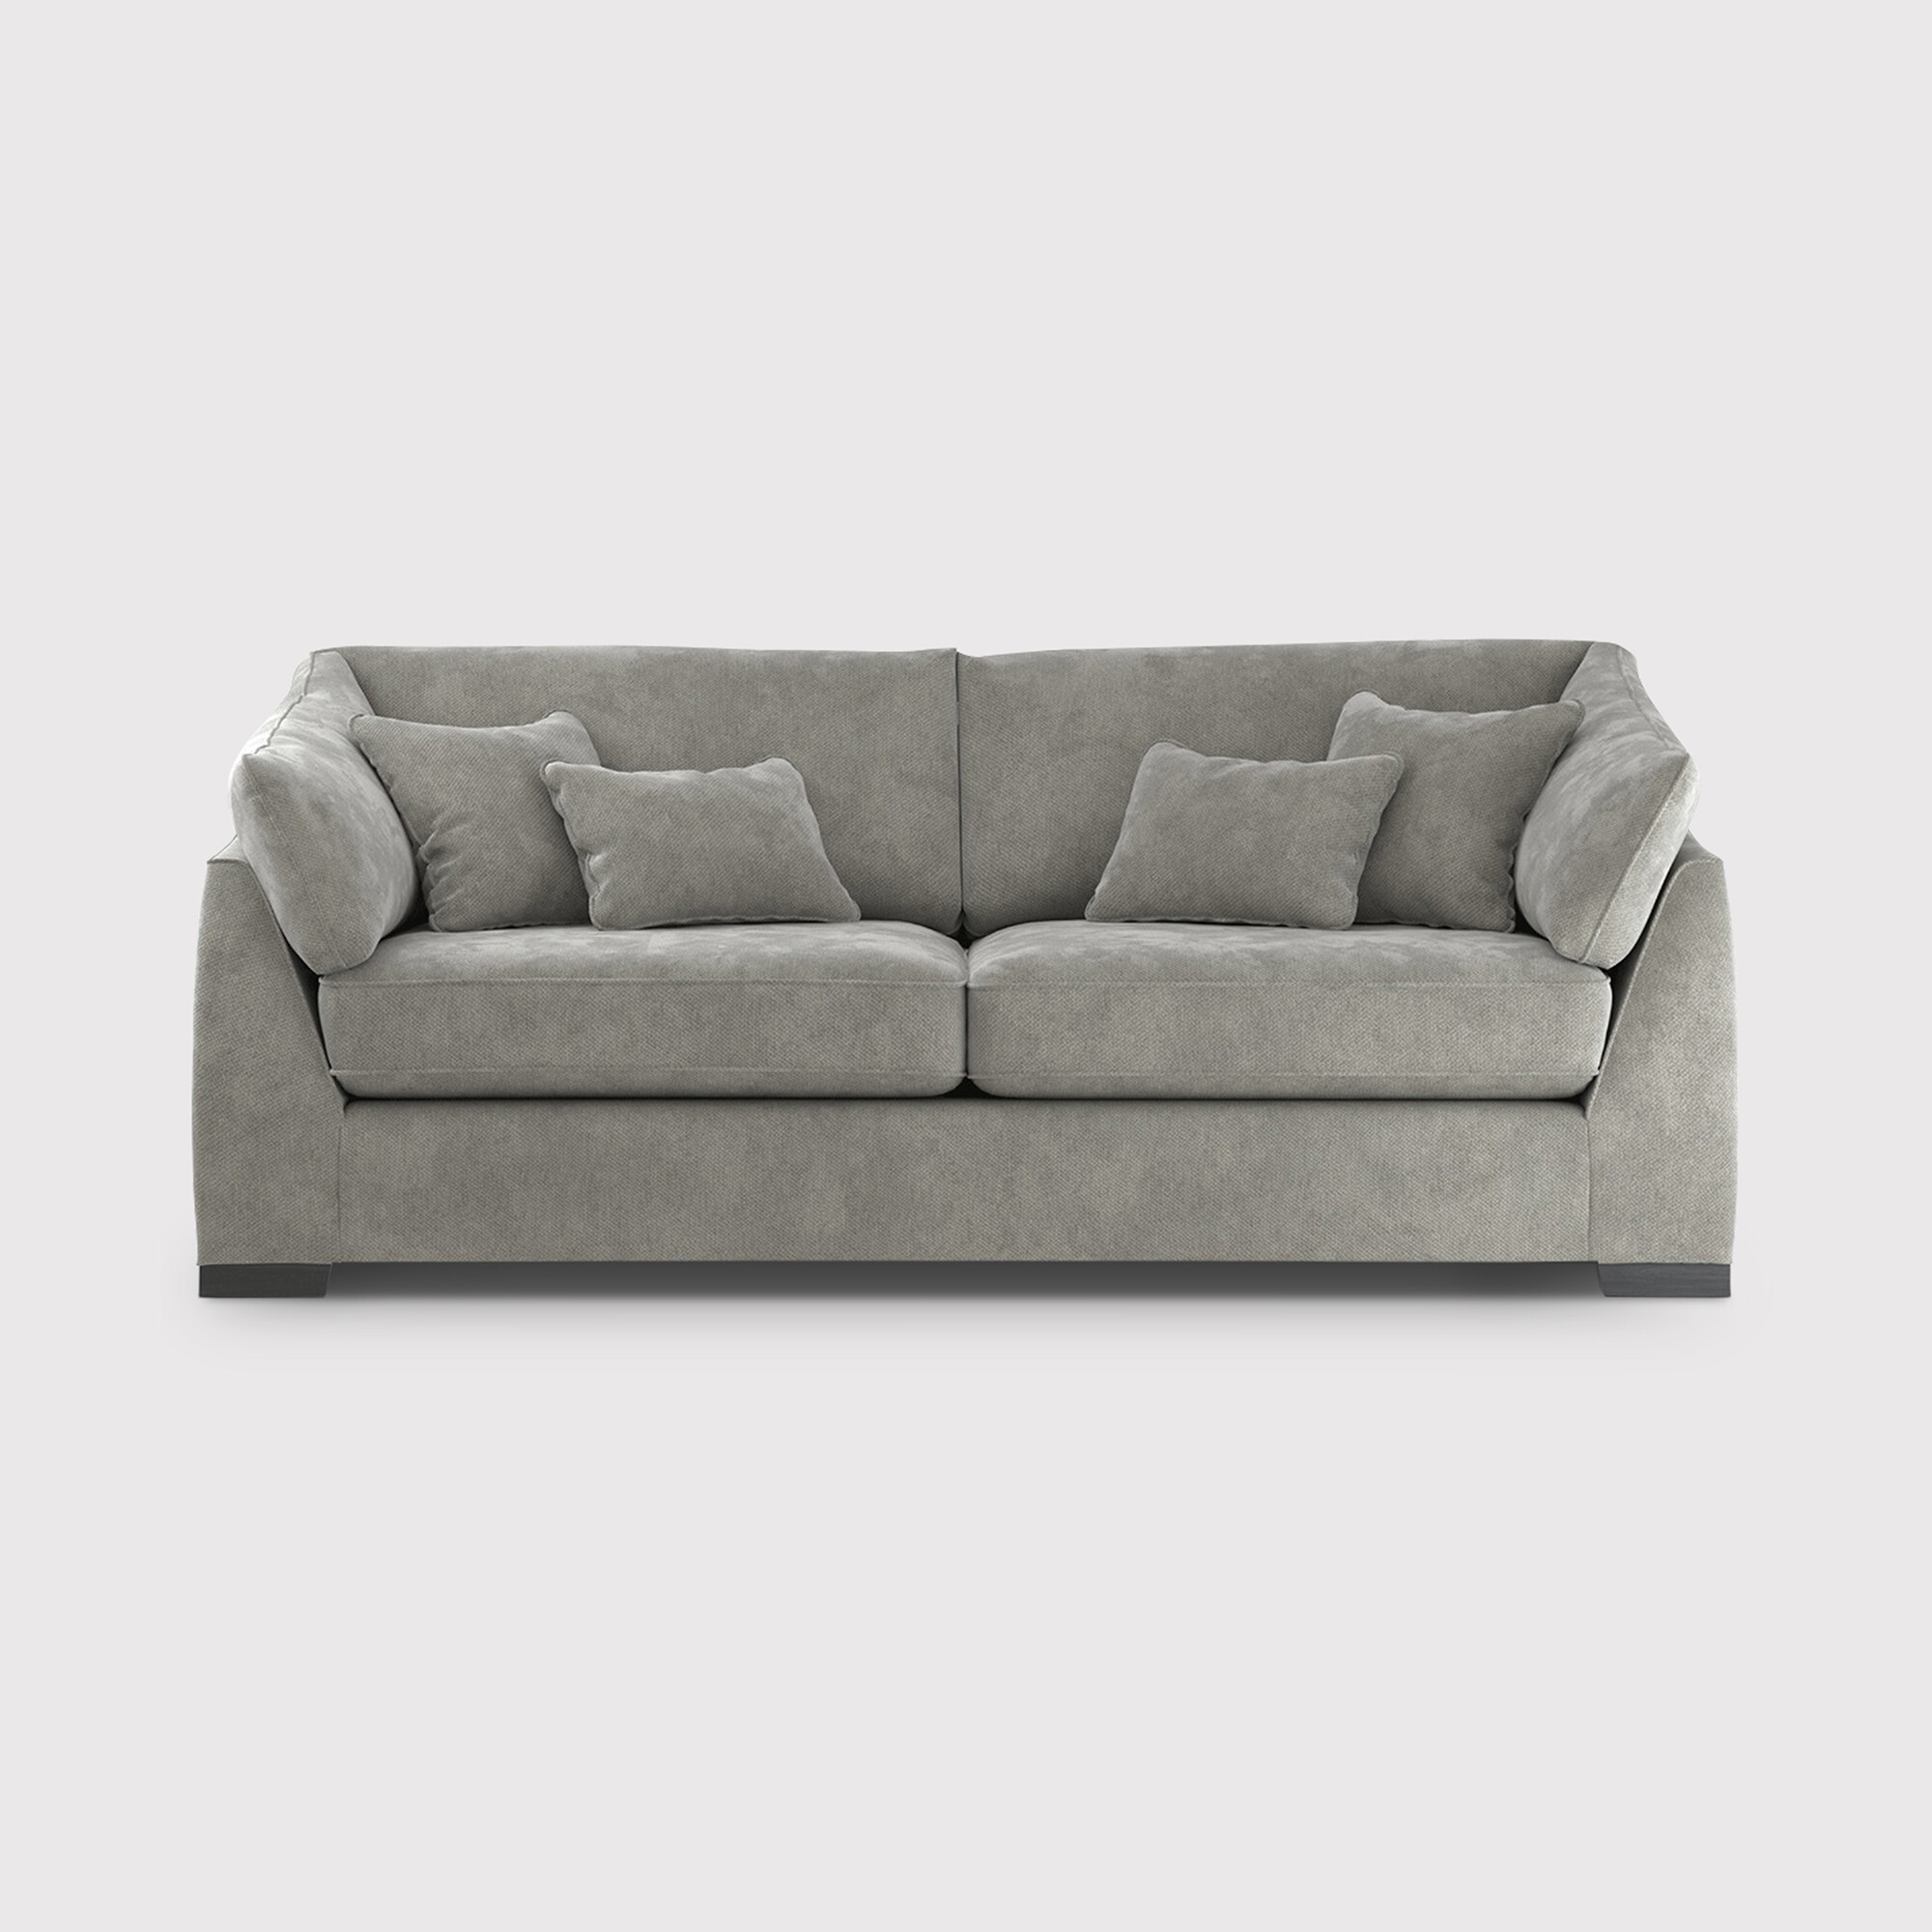 Borelly 3 Seater Sofa, Grey Fabric | Barker & Stonehouse